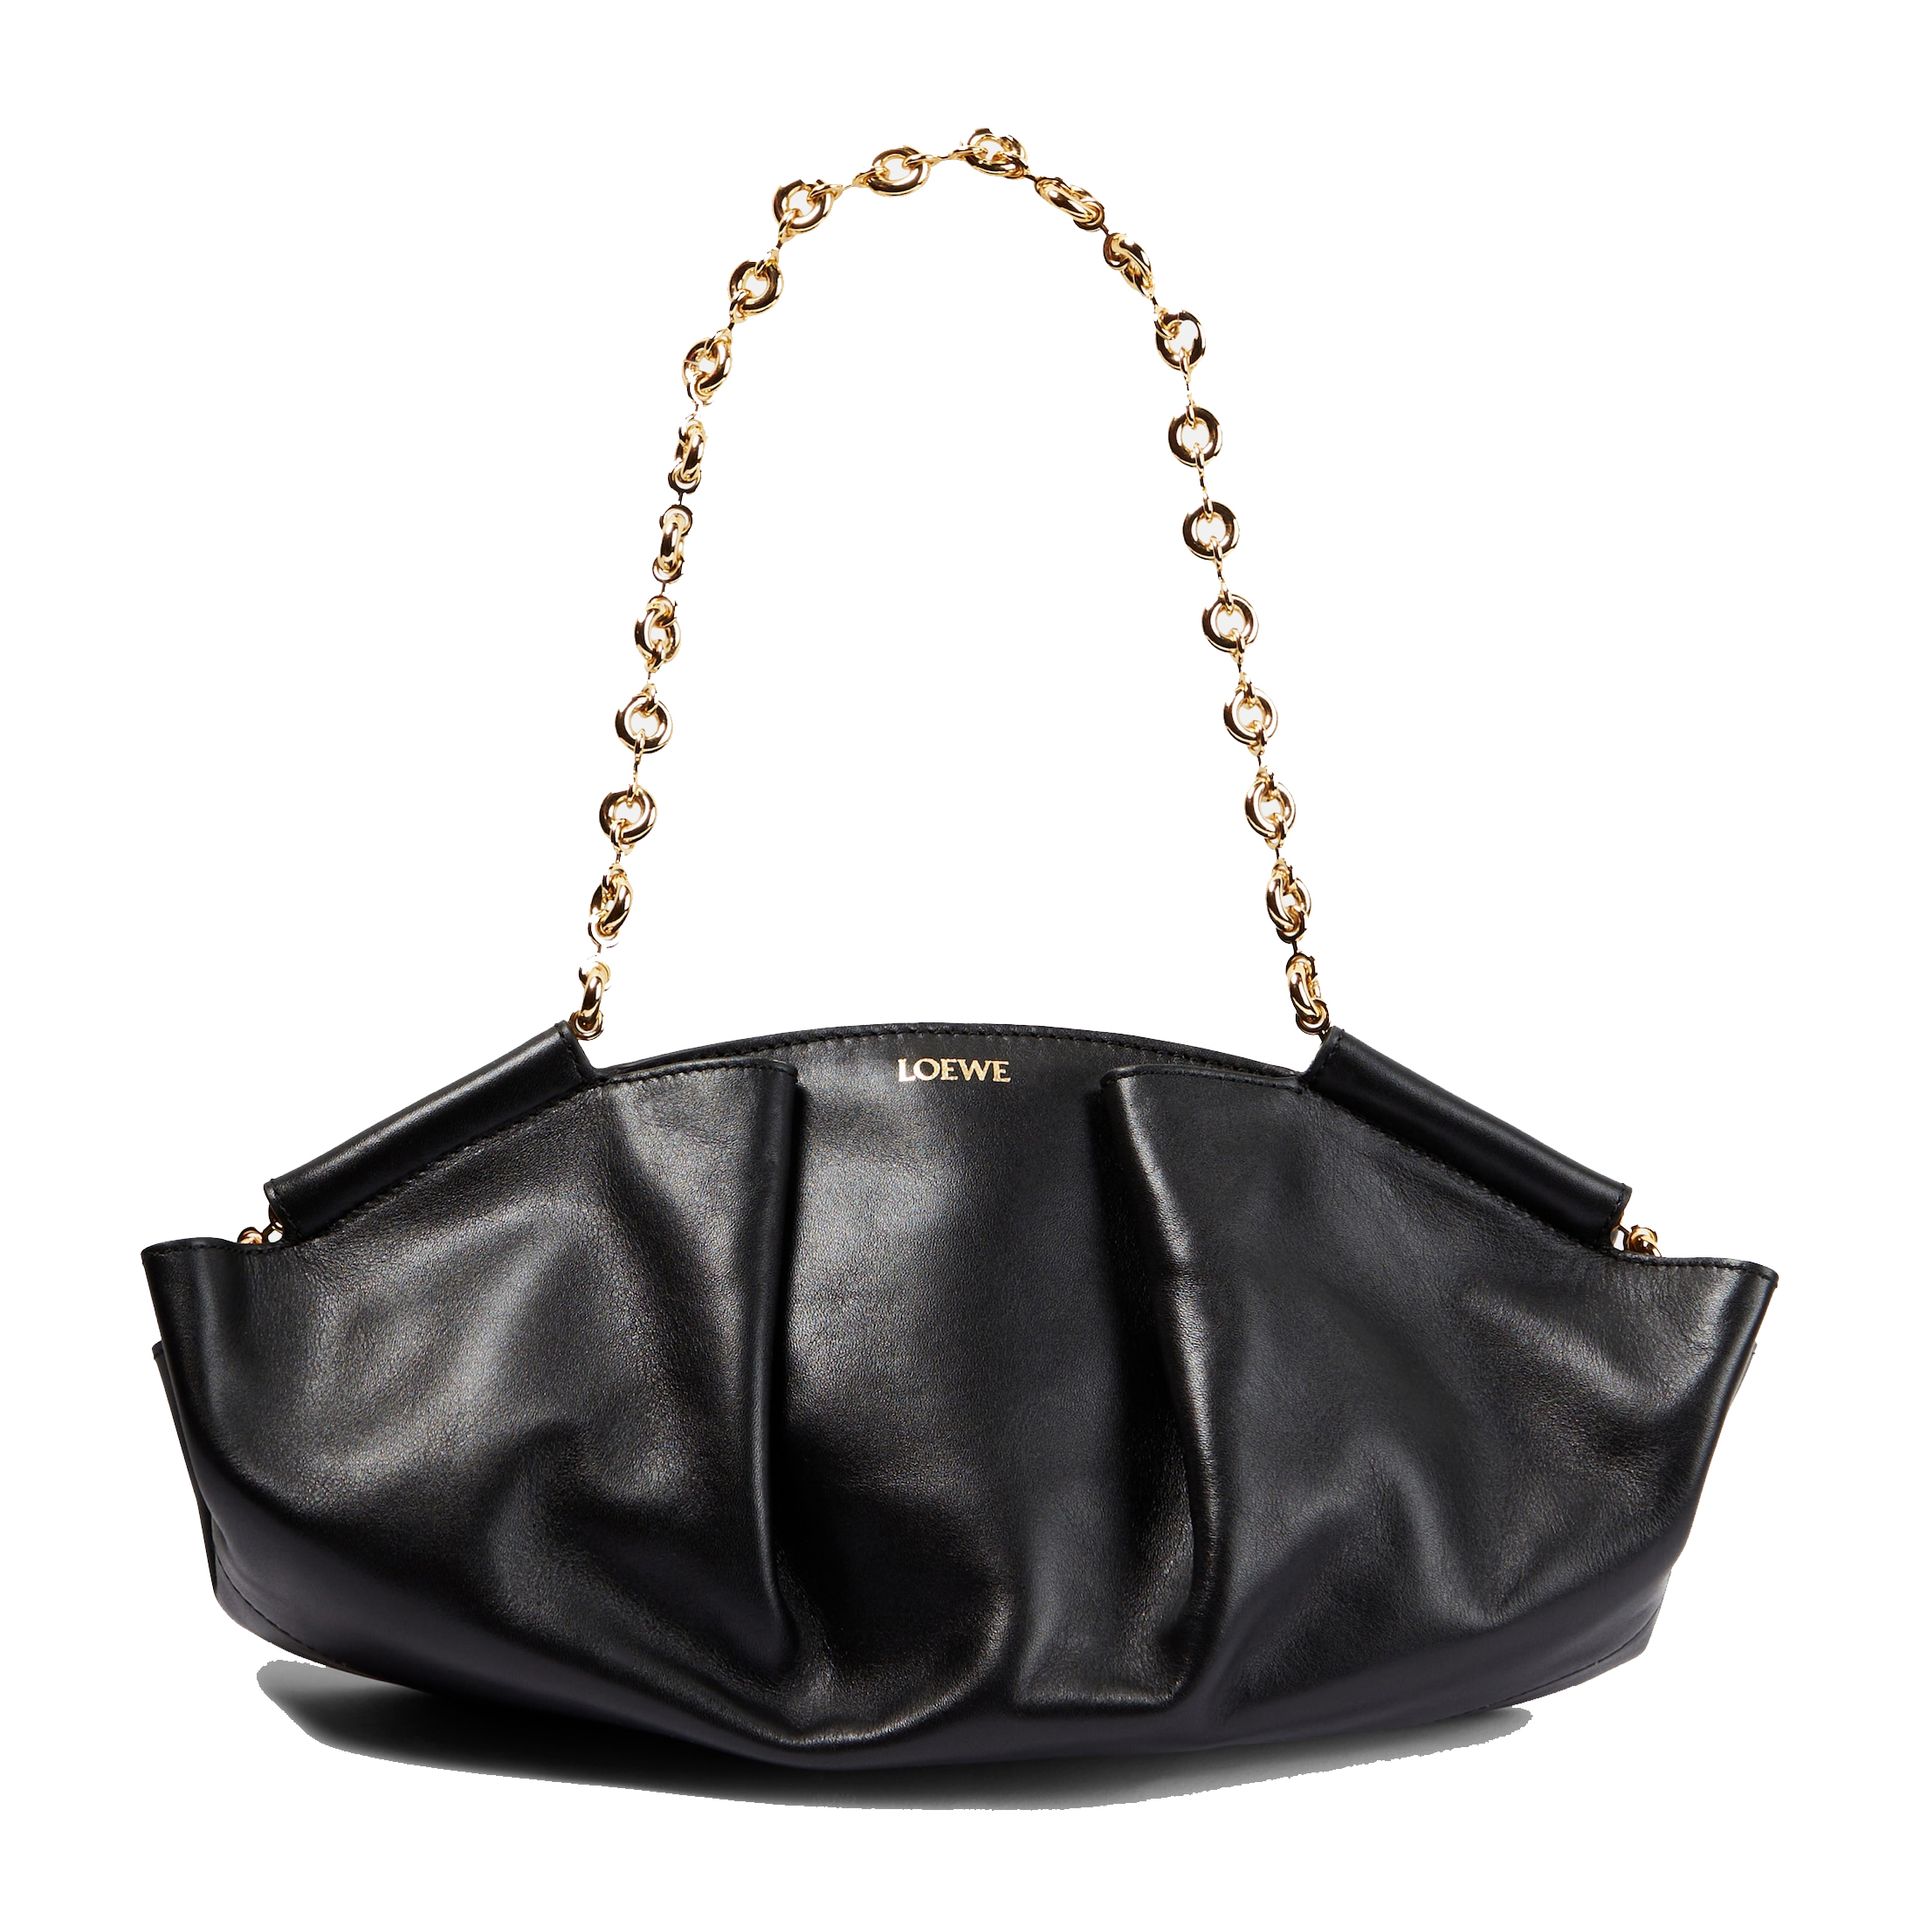 The Best New Designer Handbags 2023 from Prada to Loewe | Marie Claire UK